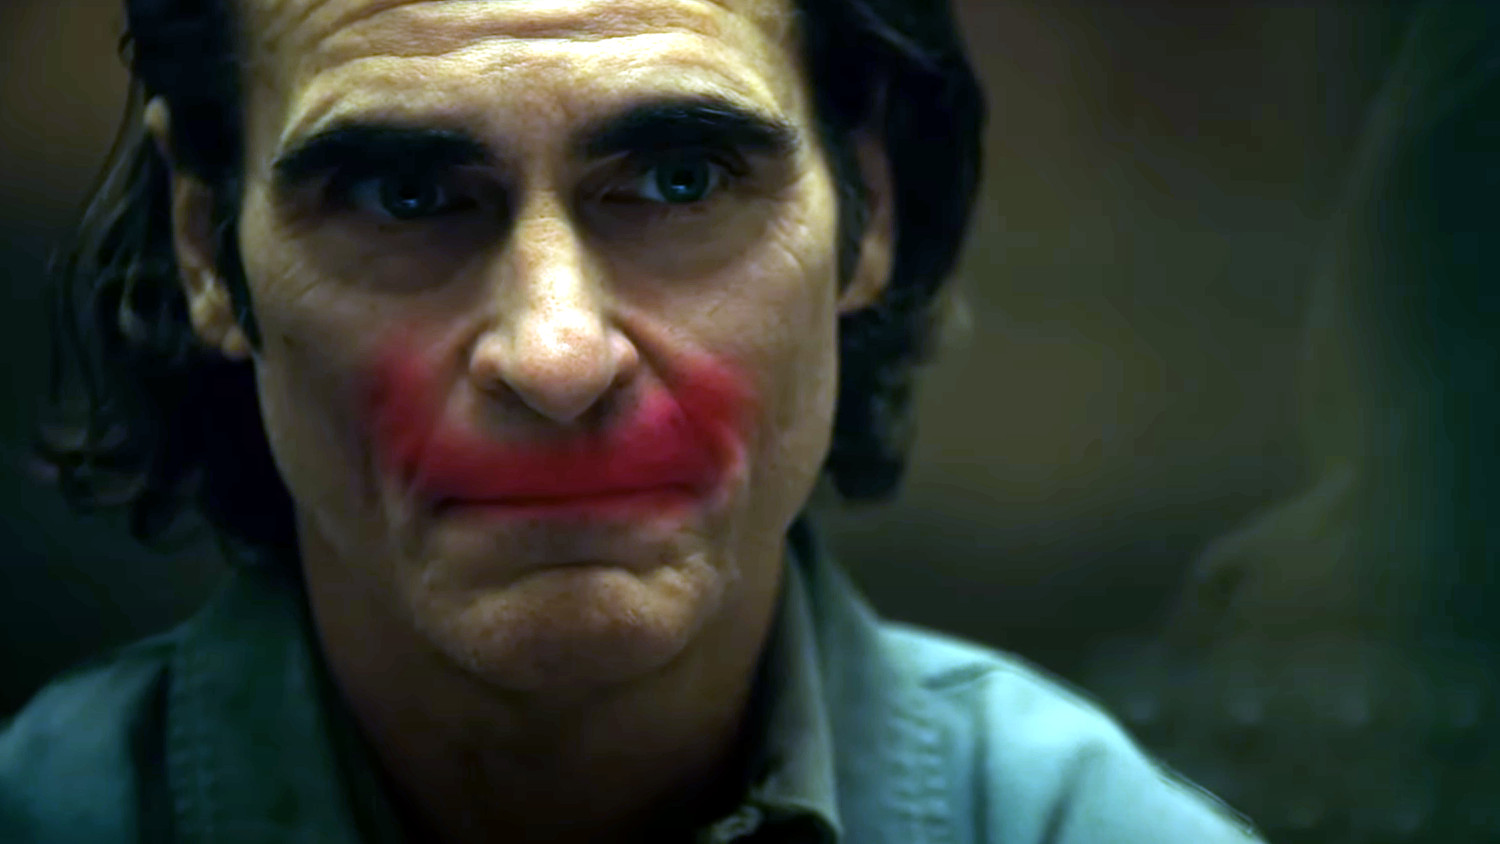 Joker 2 Trailer Is Here With Big YouTube Warning